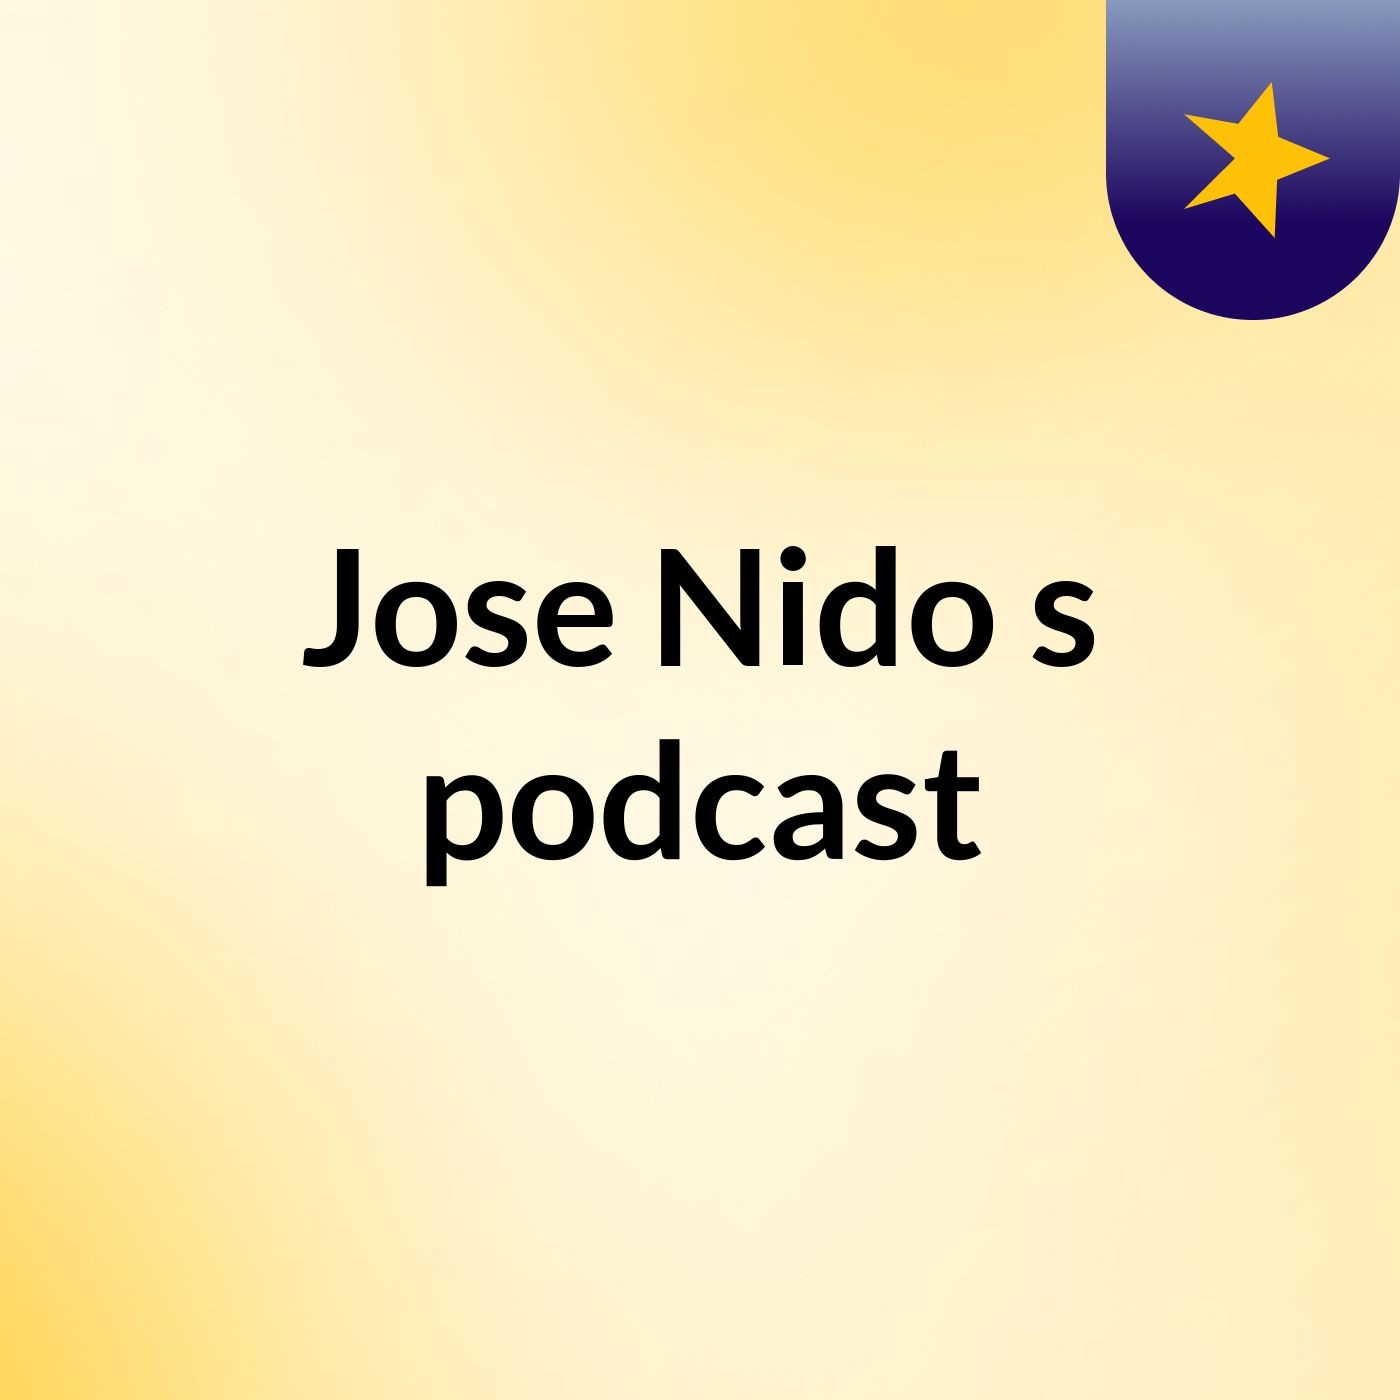 Jose Nido's podcast